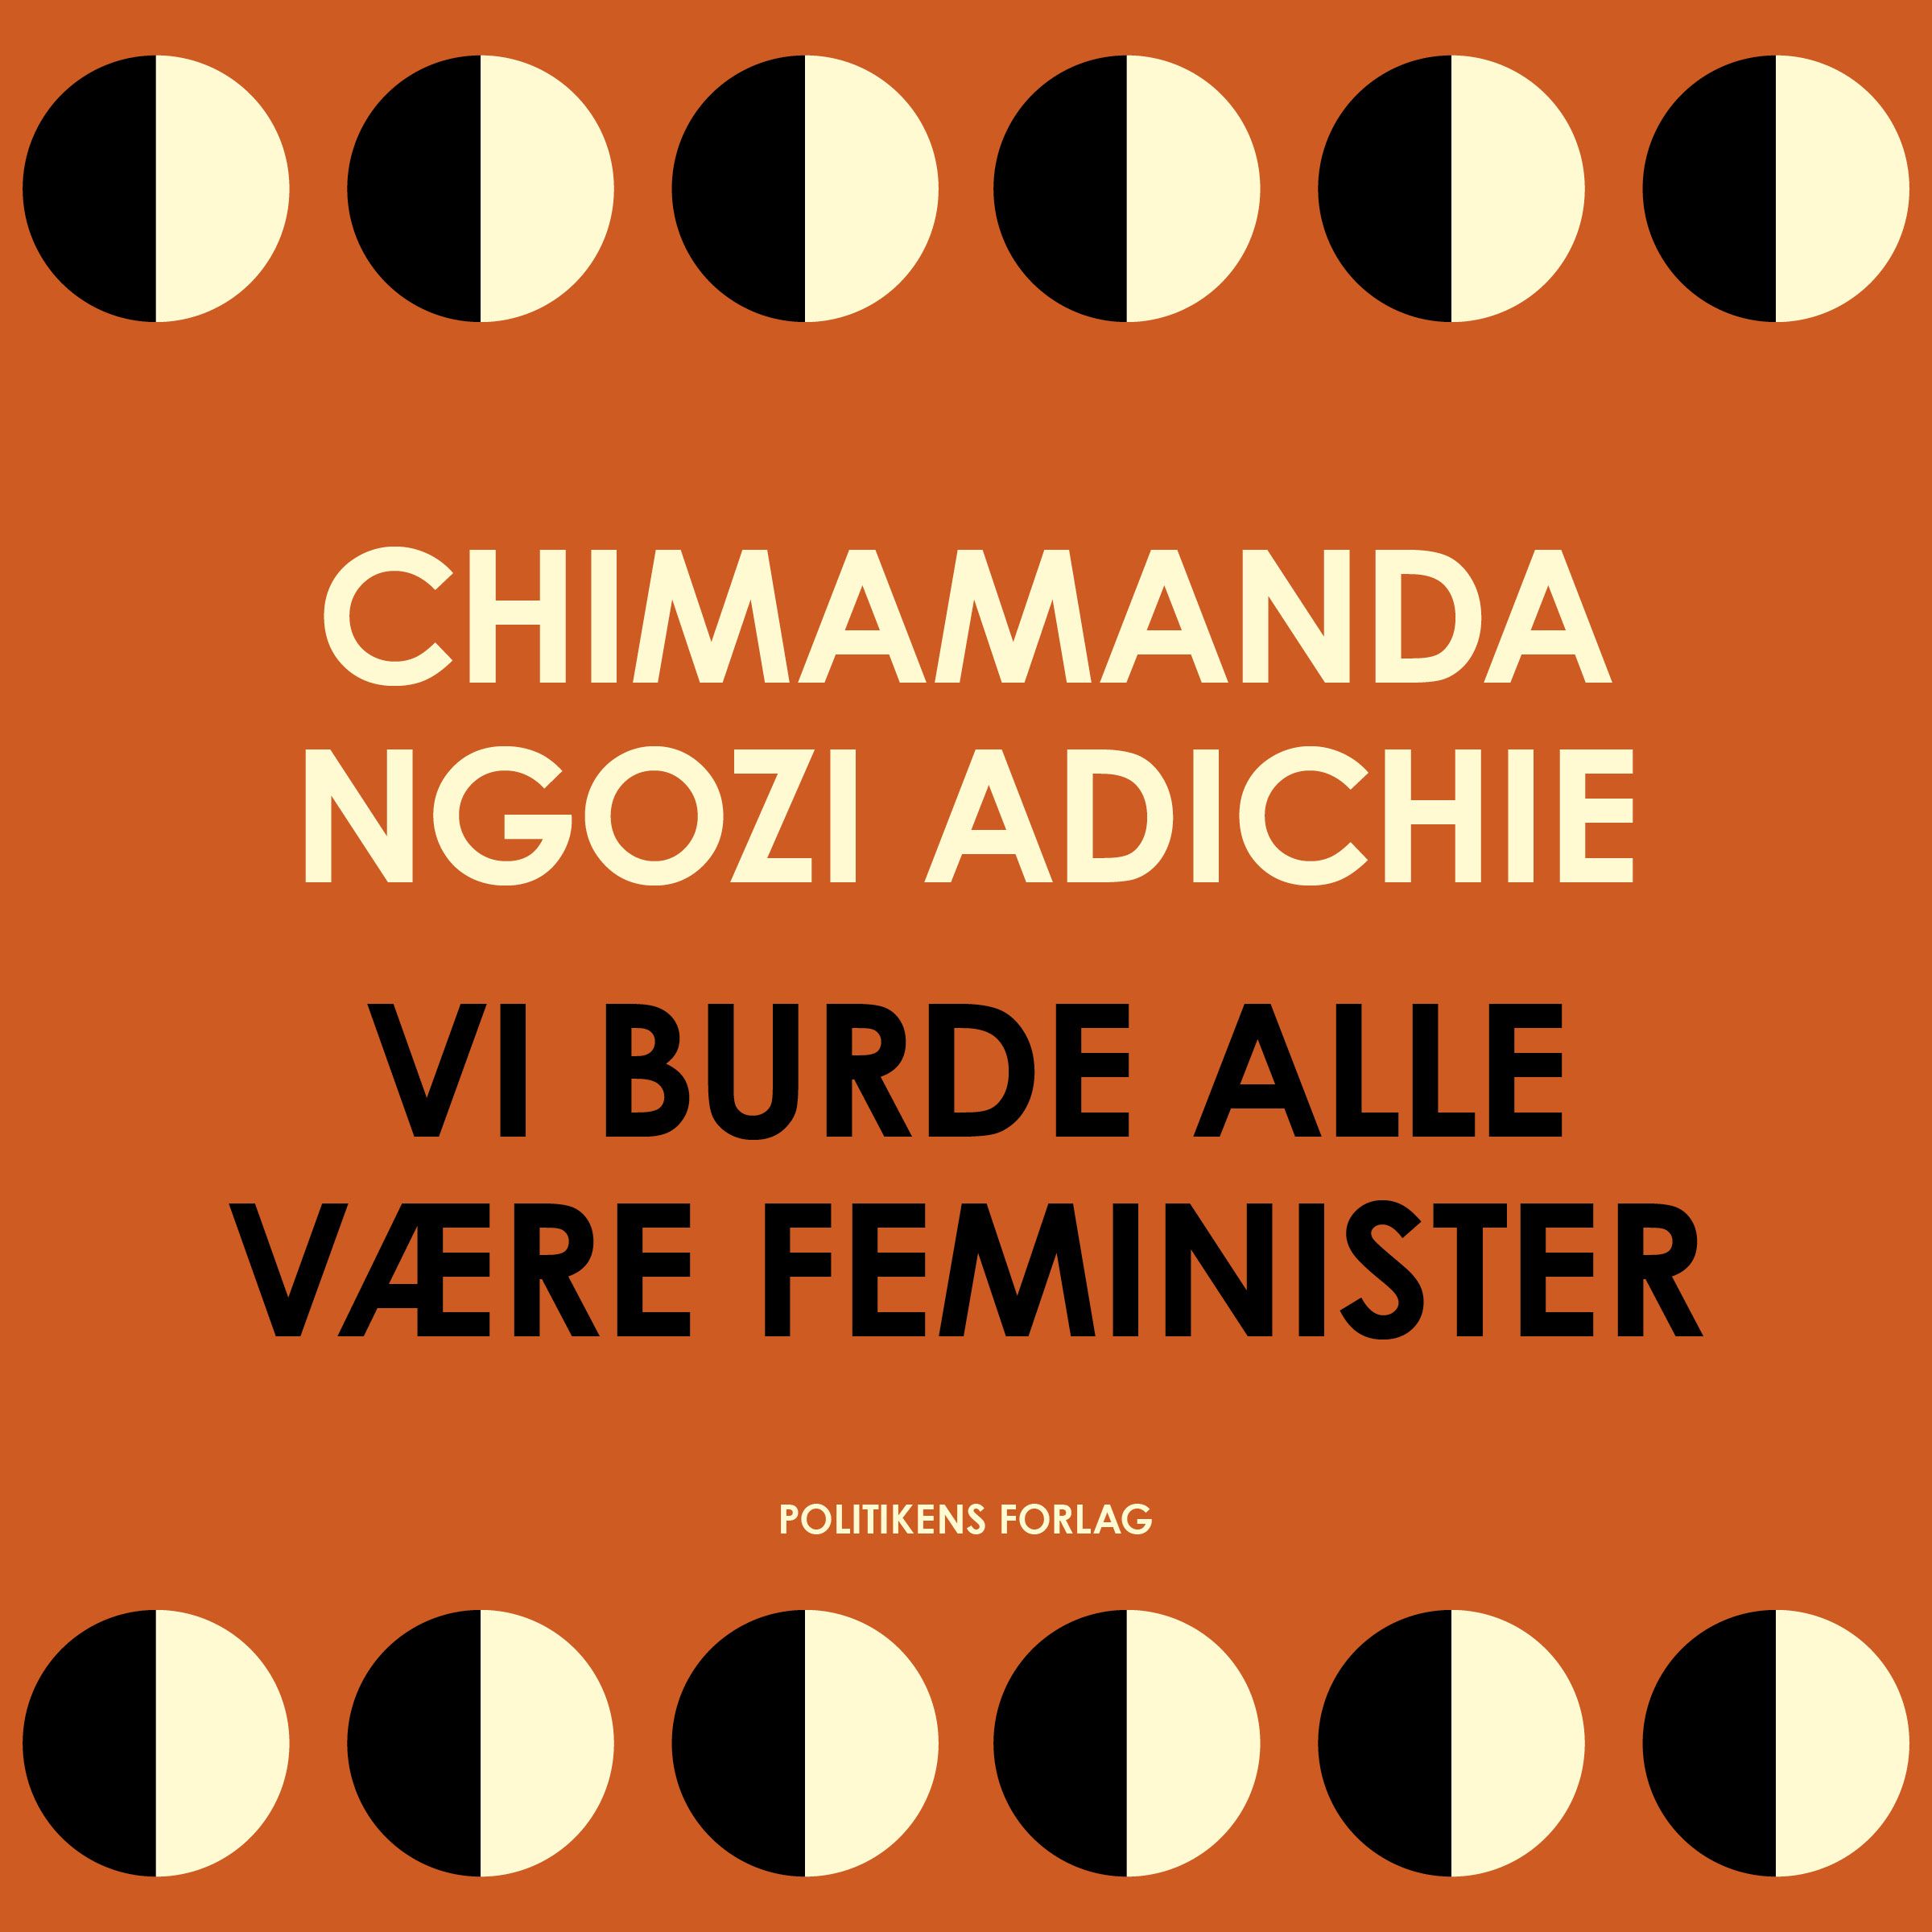 Vi burde alle være feminister, ljudbok av Chimamanda Ngozi Adichie